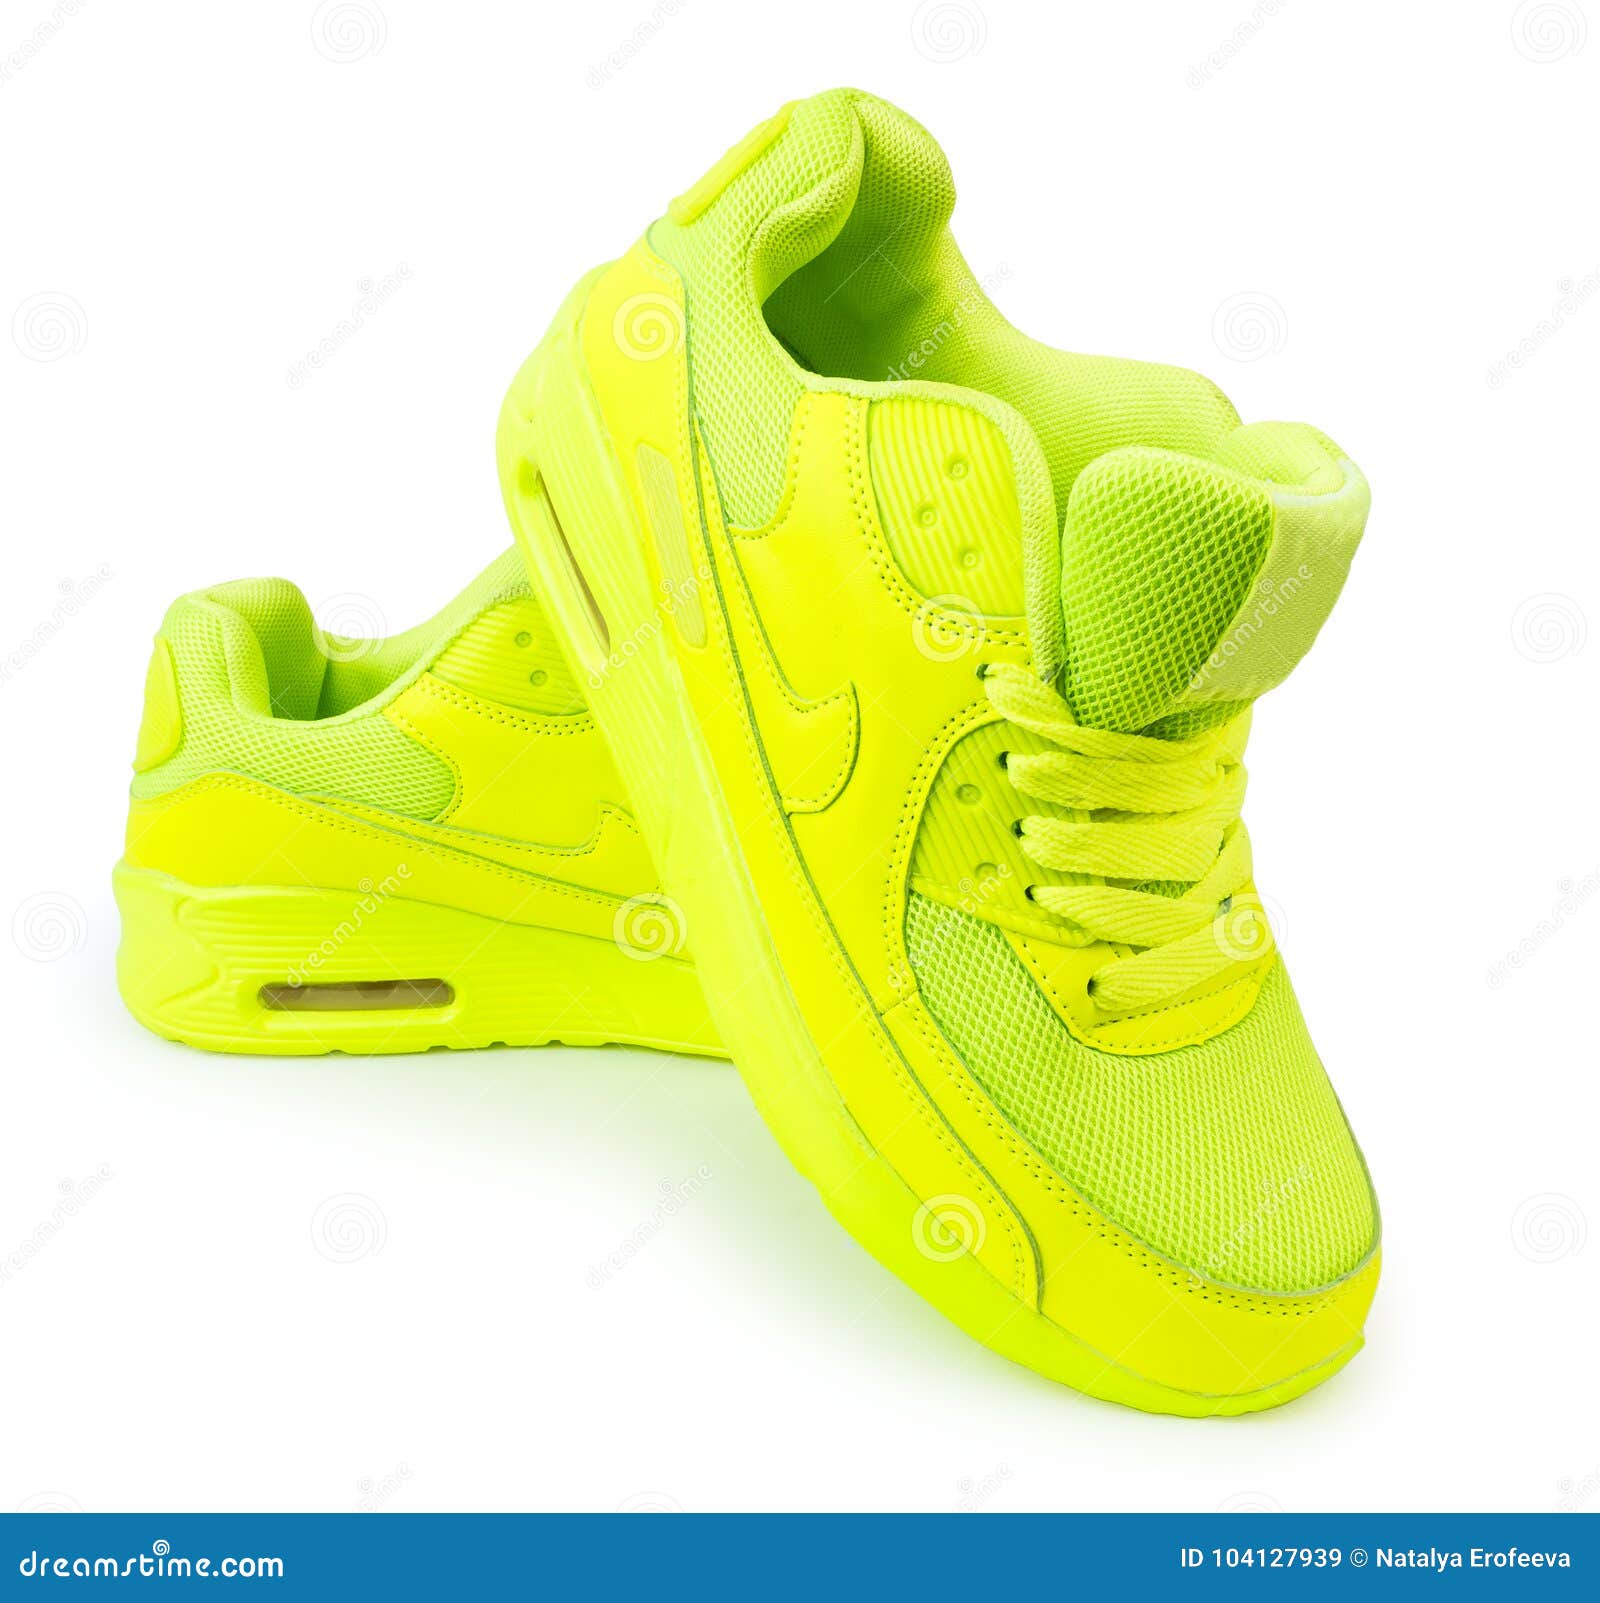 green light shoes